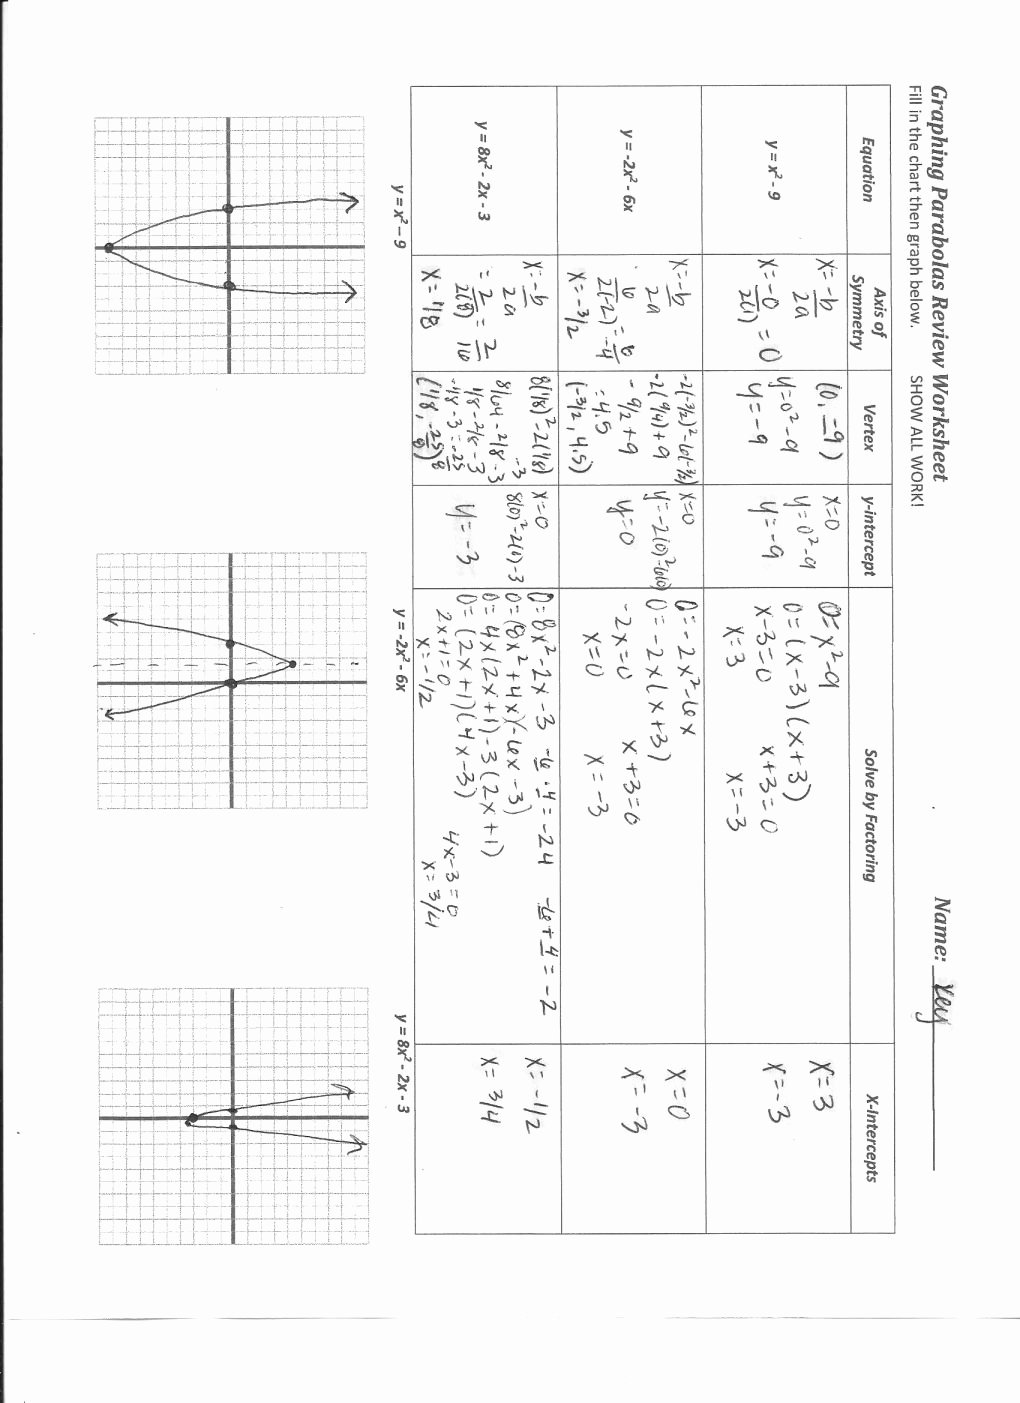 Graphing Quadratic Functions Worksheet Lovely Graphing Parabolas Worksheet Algebra 1